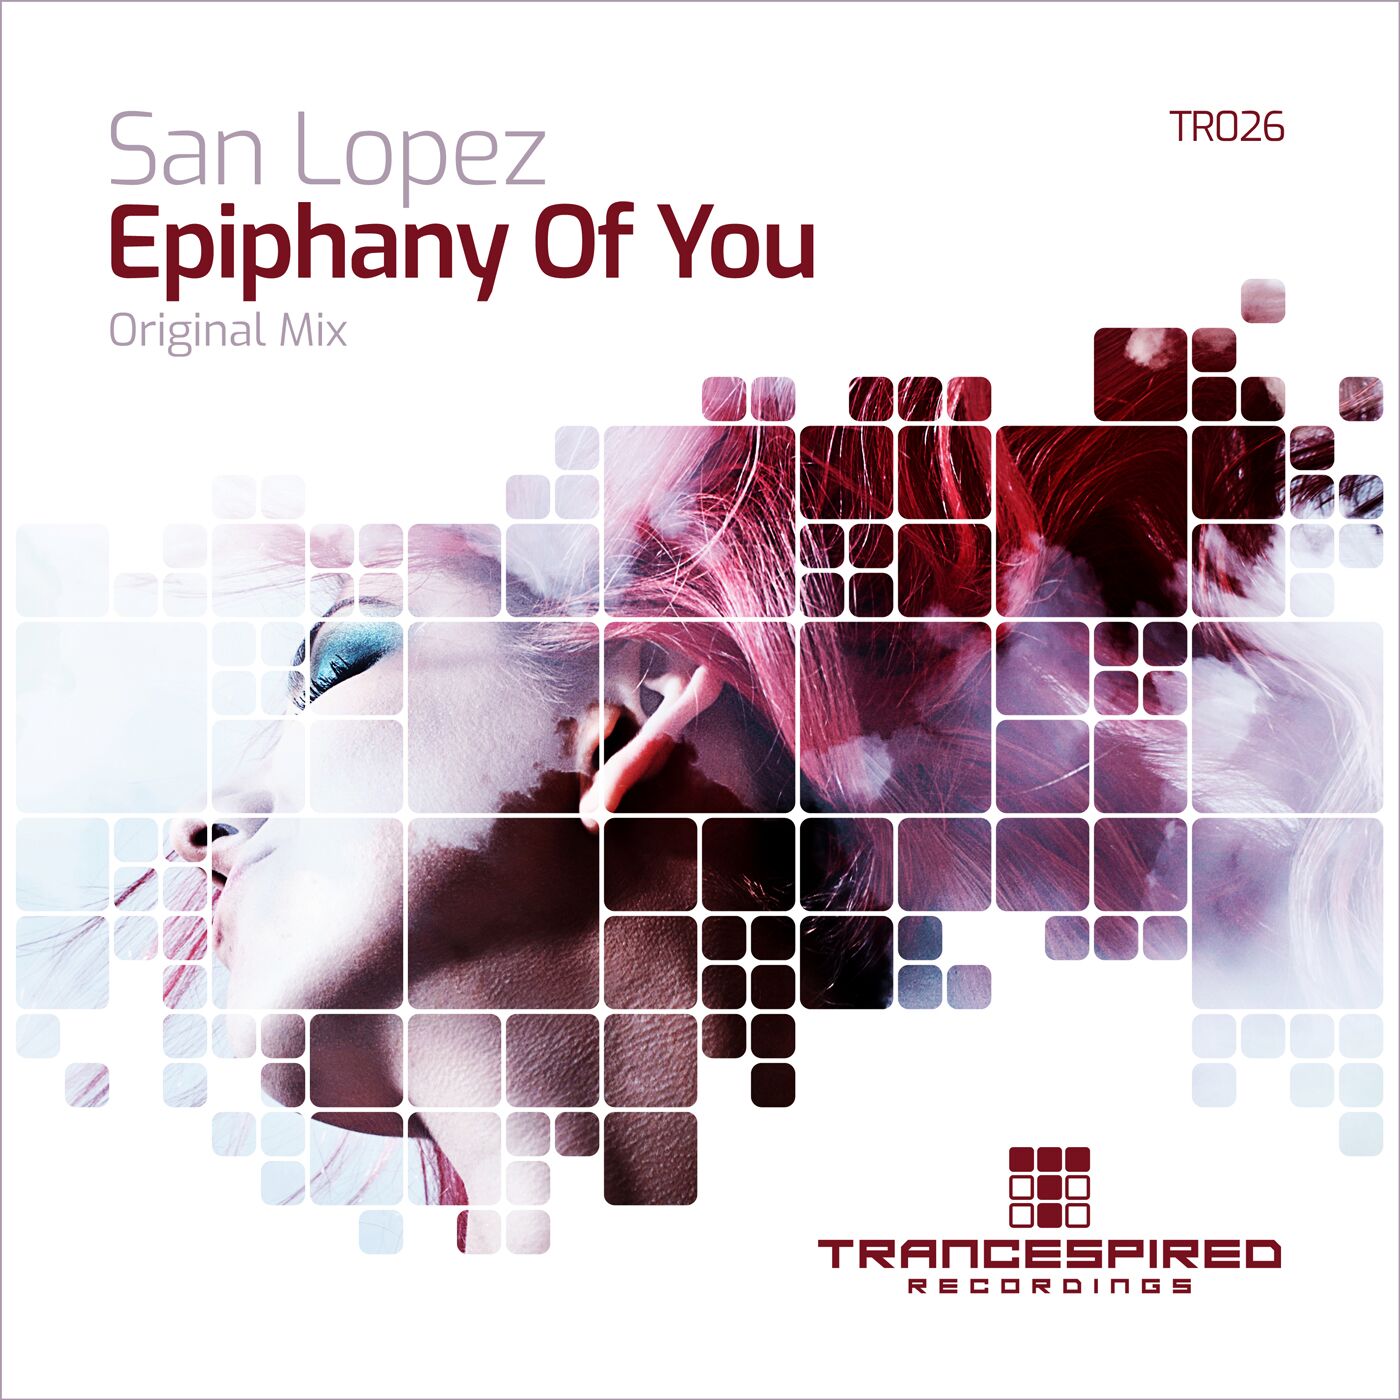 San Lopez presnts Epiphany Of You on Trancespired Recordings